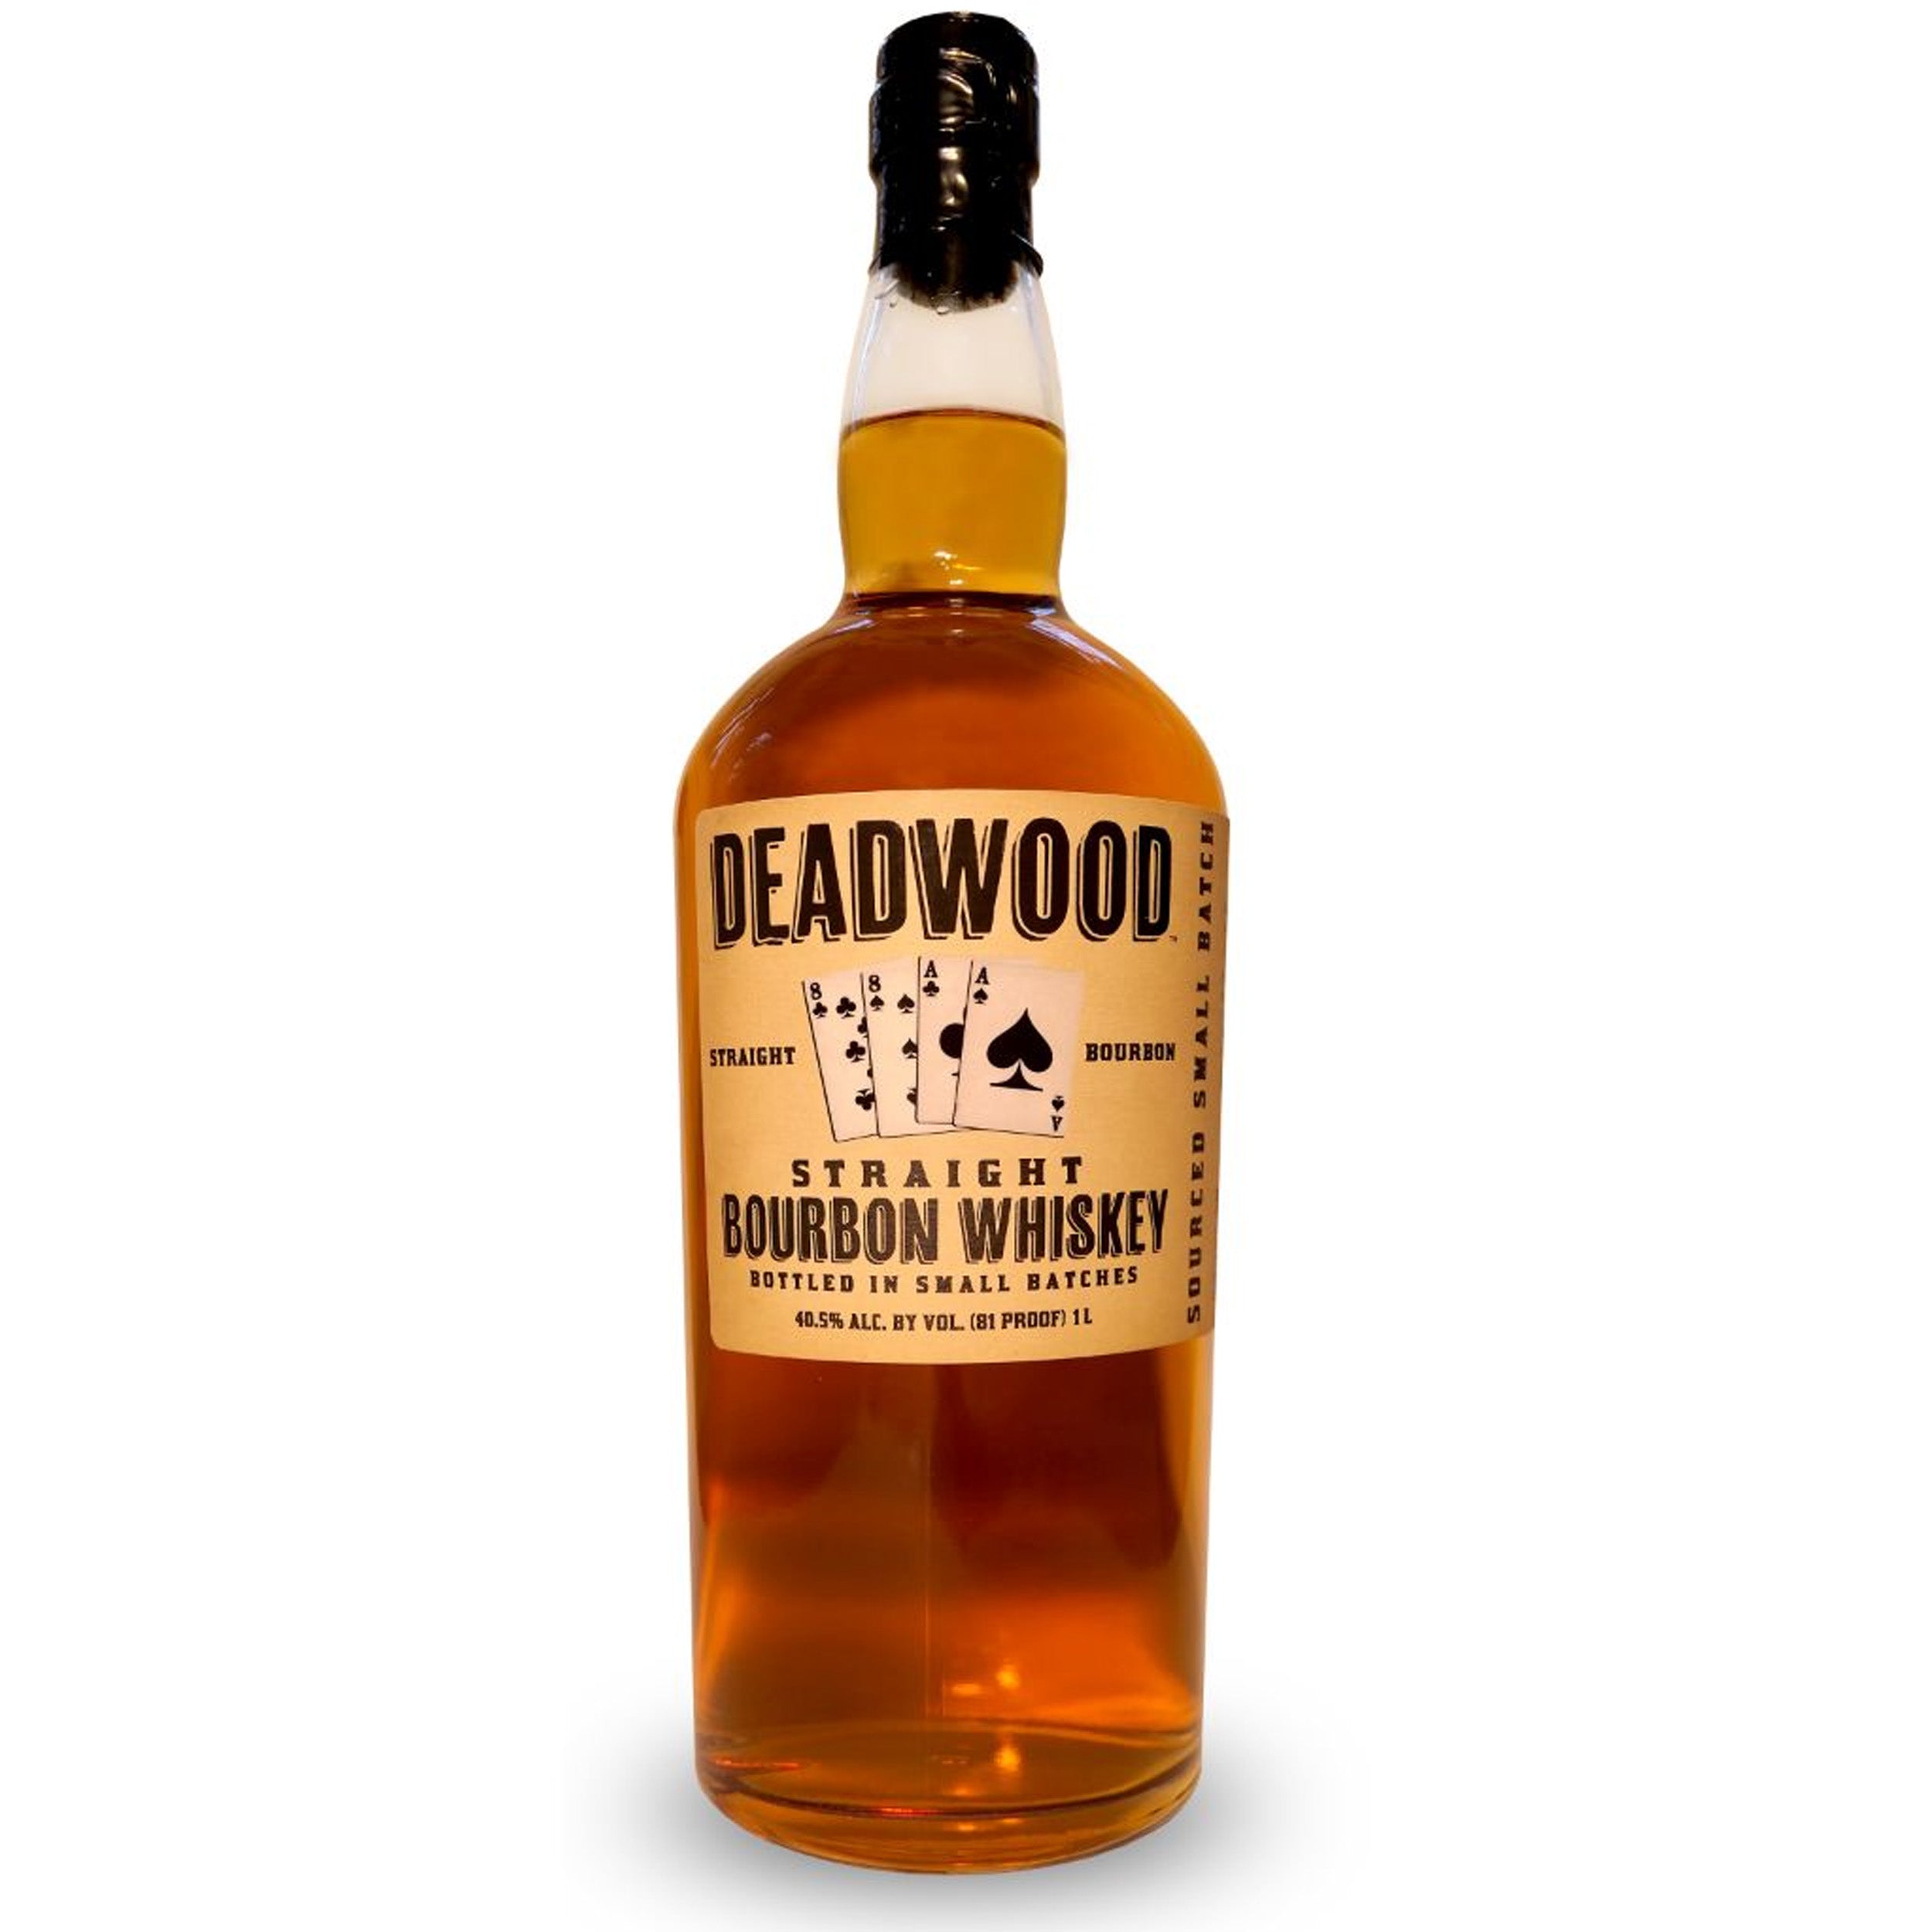 Deadwood Bourbon Whiskey